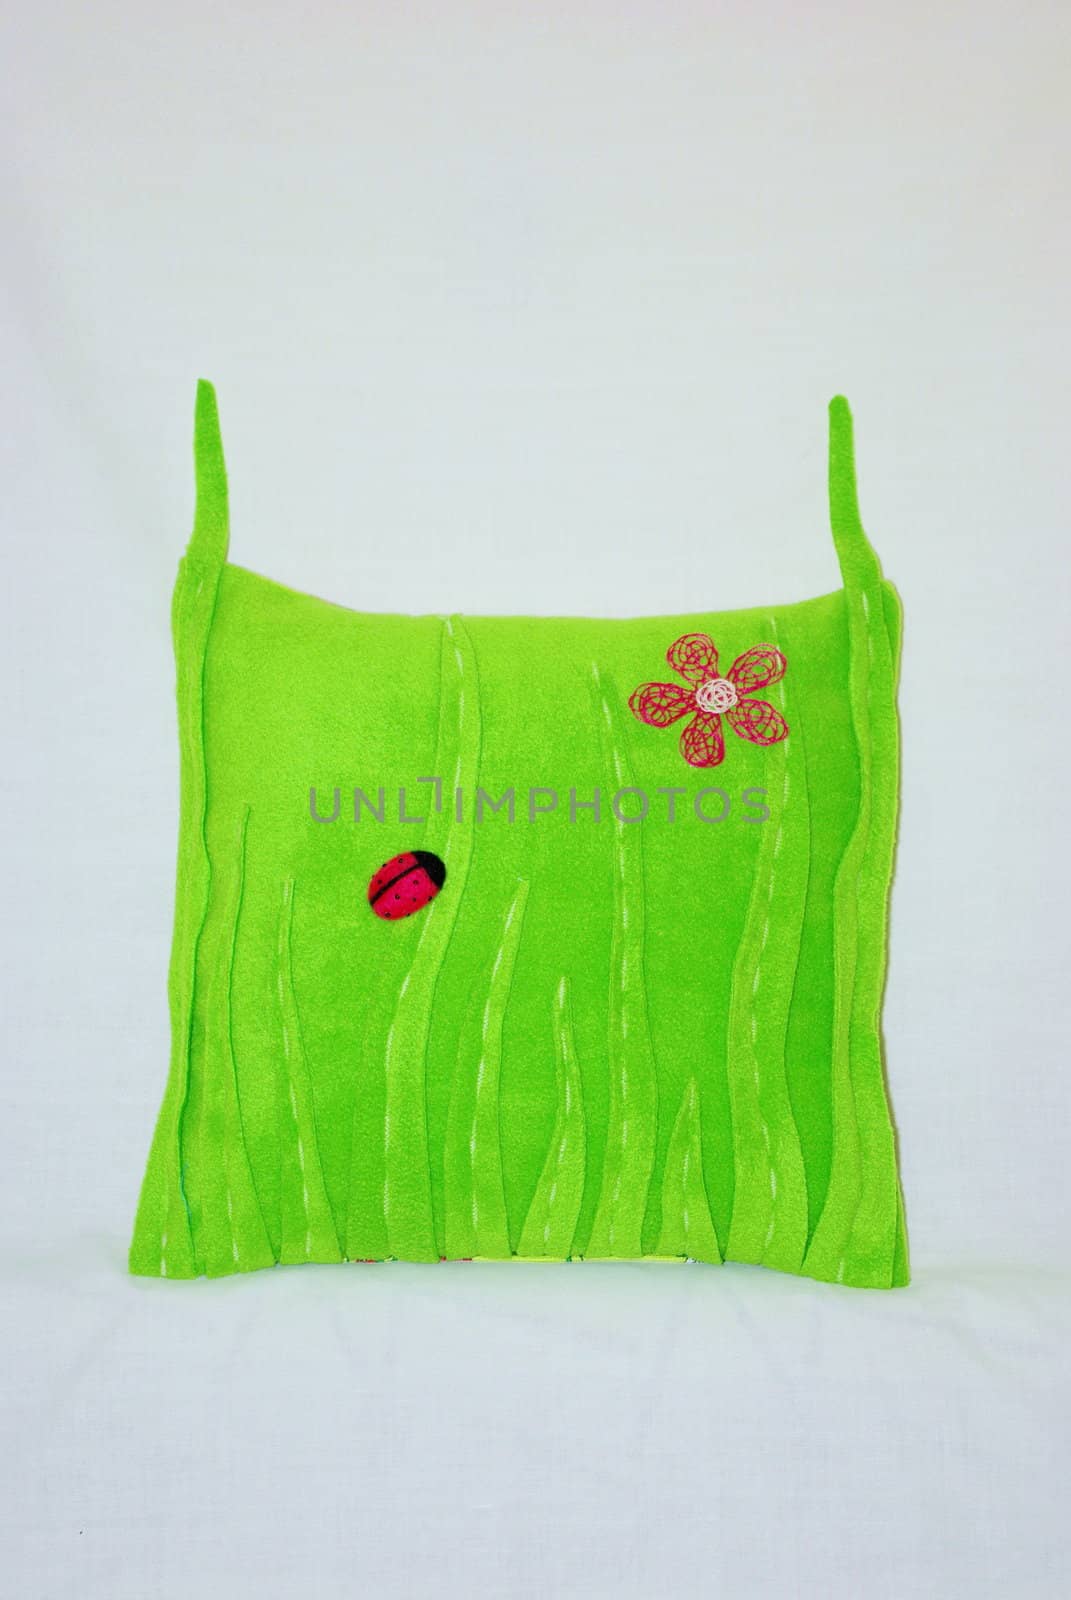 Well decorated handmade green pillow